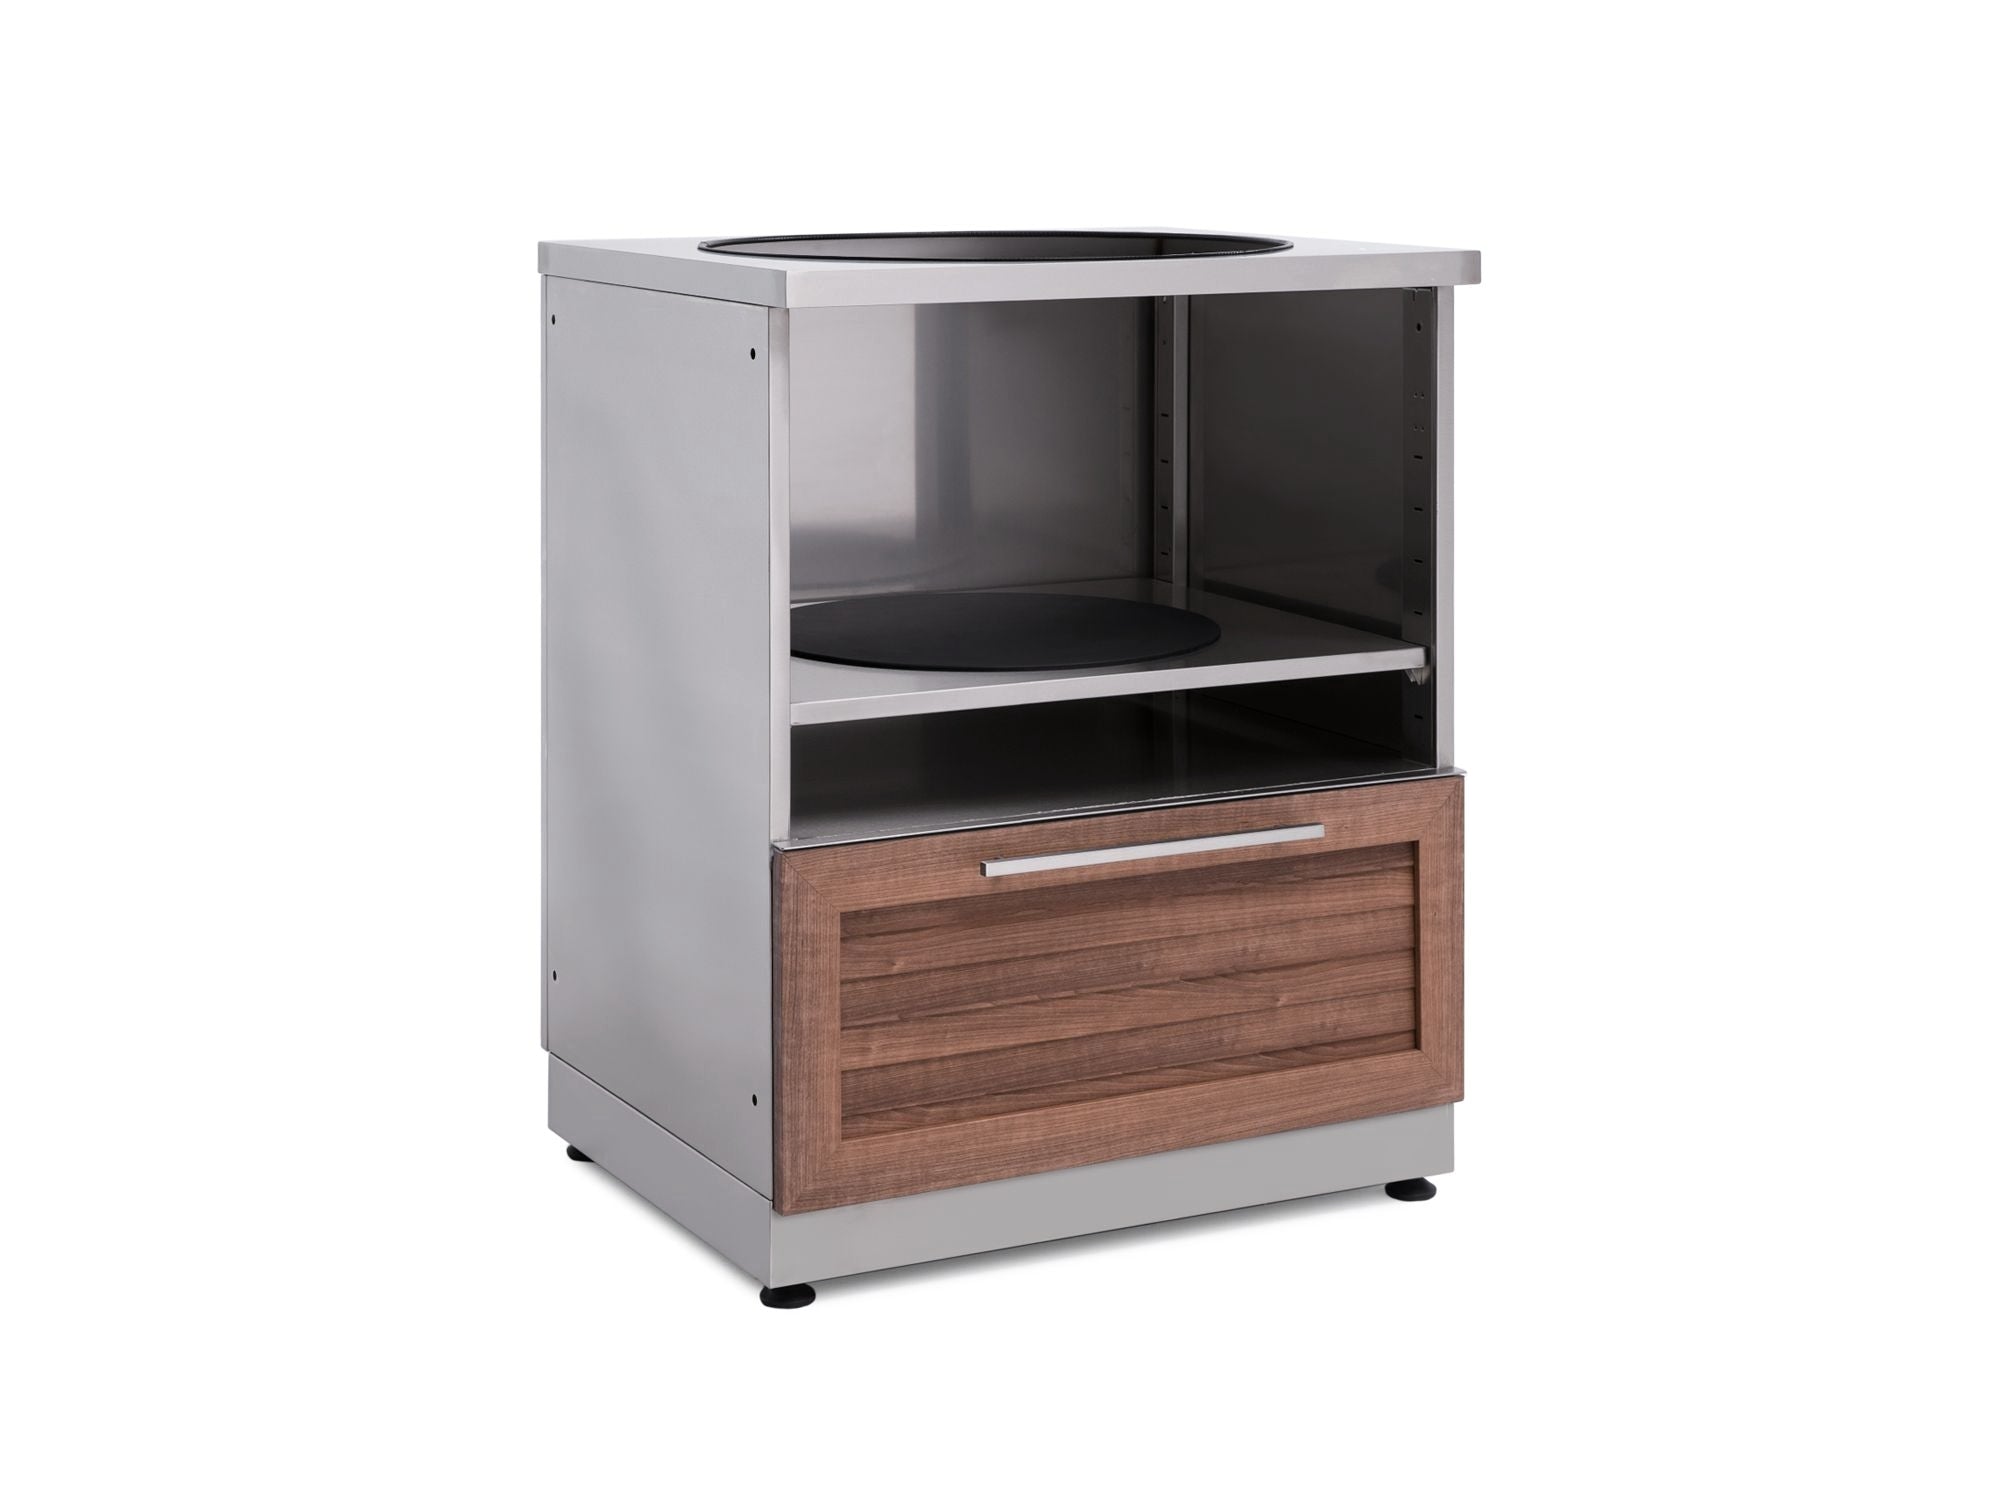 Outdoor Kitchen Stainless Steel Kamado Cabinet